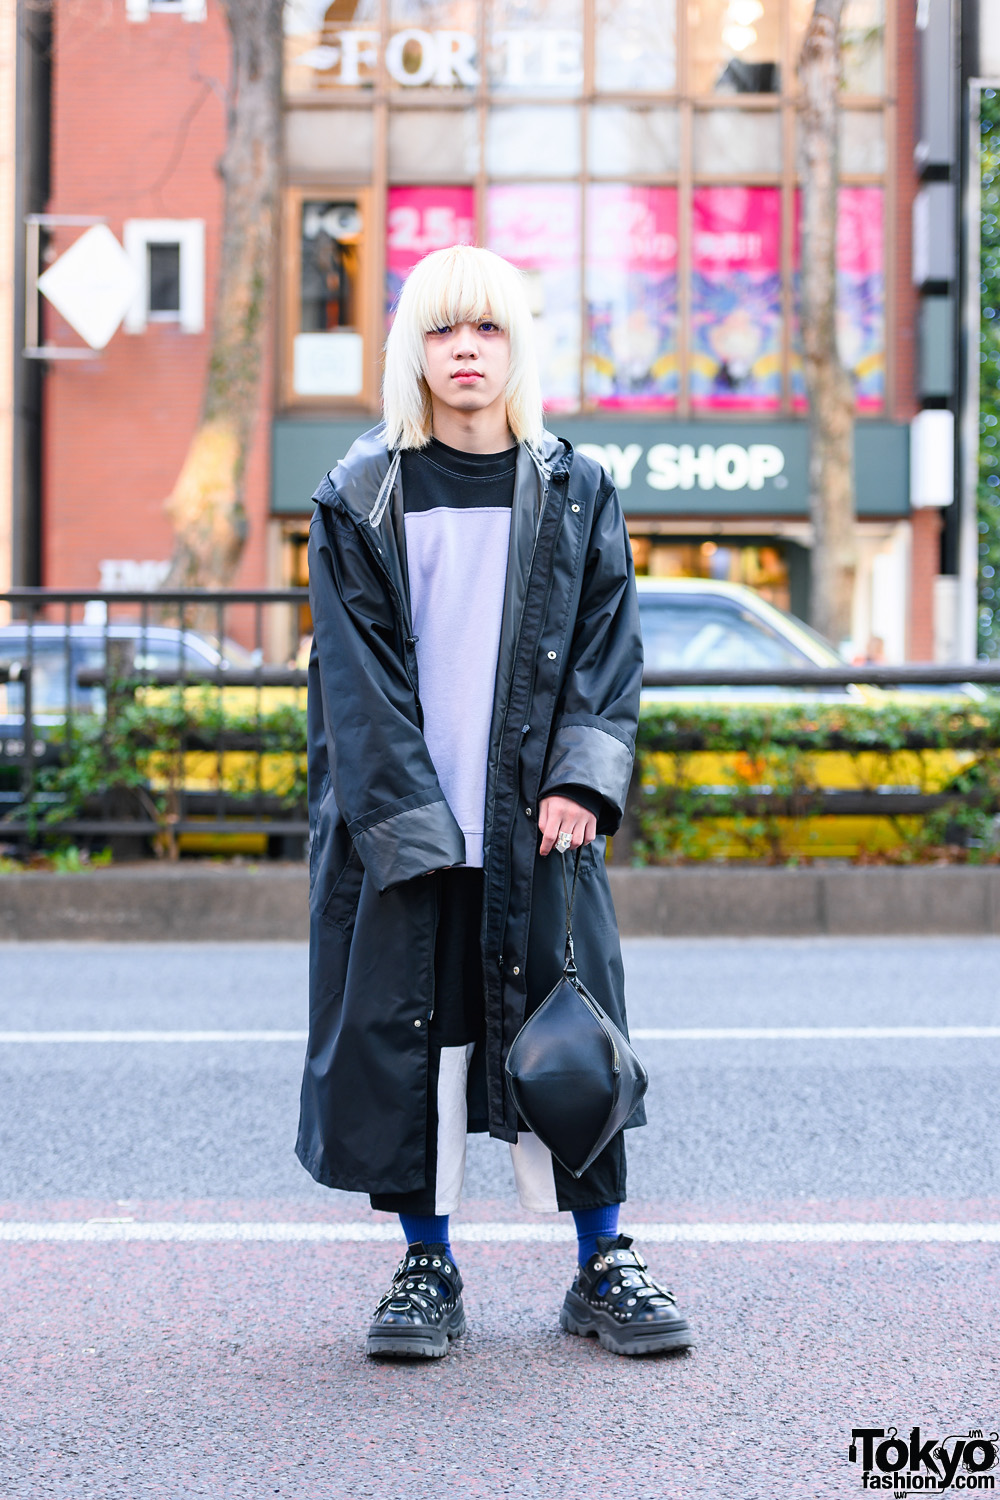 Tokyo Streetwear w/ Fringed Bob, Vivienne Westwood Armor Ring, Vetements Hooded Coat, Martine Rose, Lau Made in Japan, Yohji Yamamoto Bag & Eytys Shoes